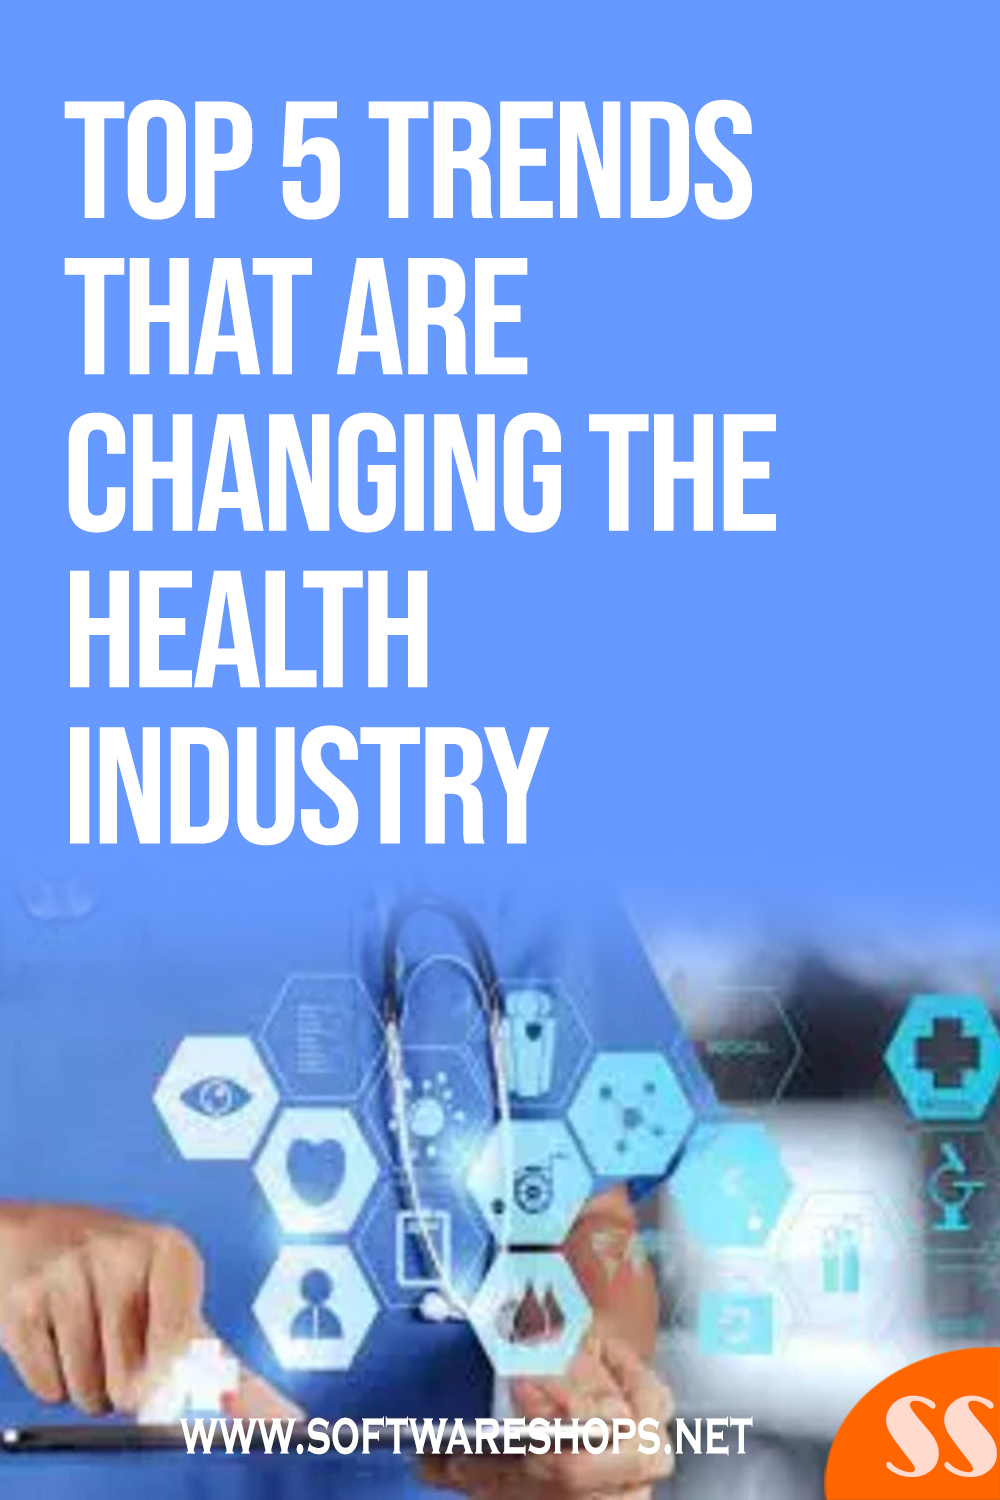 Health Industry